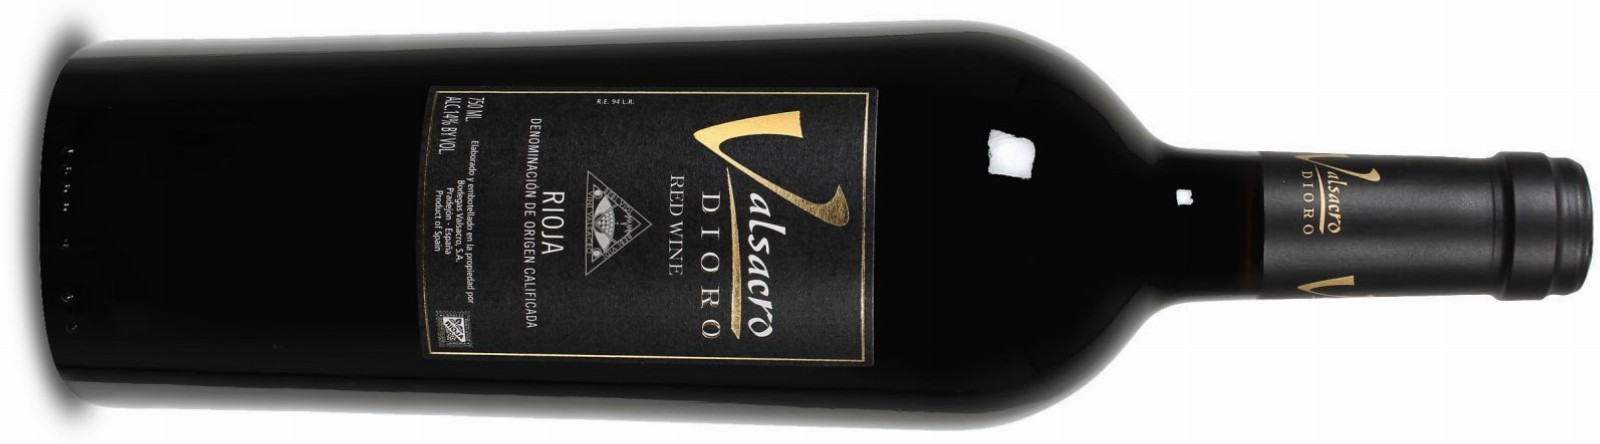 Valsacro Dioro Rioja DOCa Tinto 2001